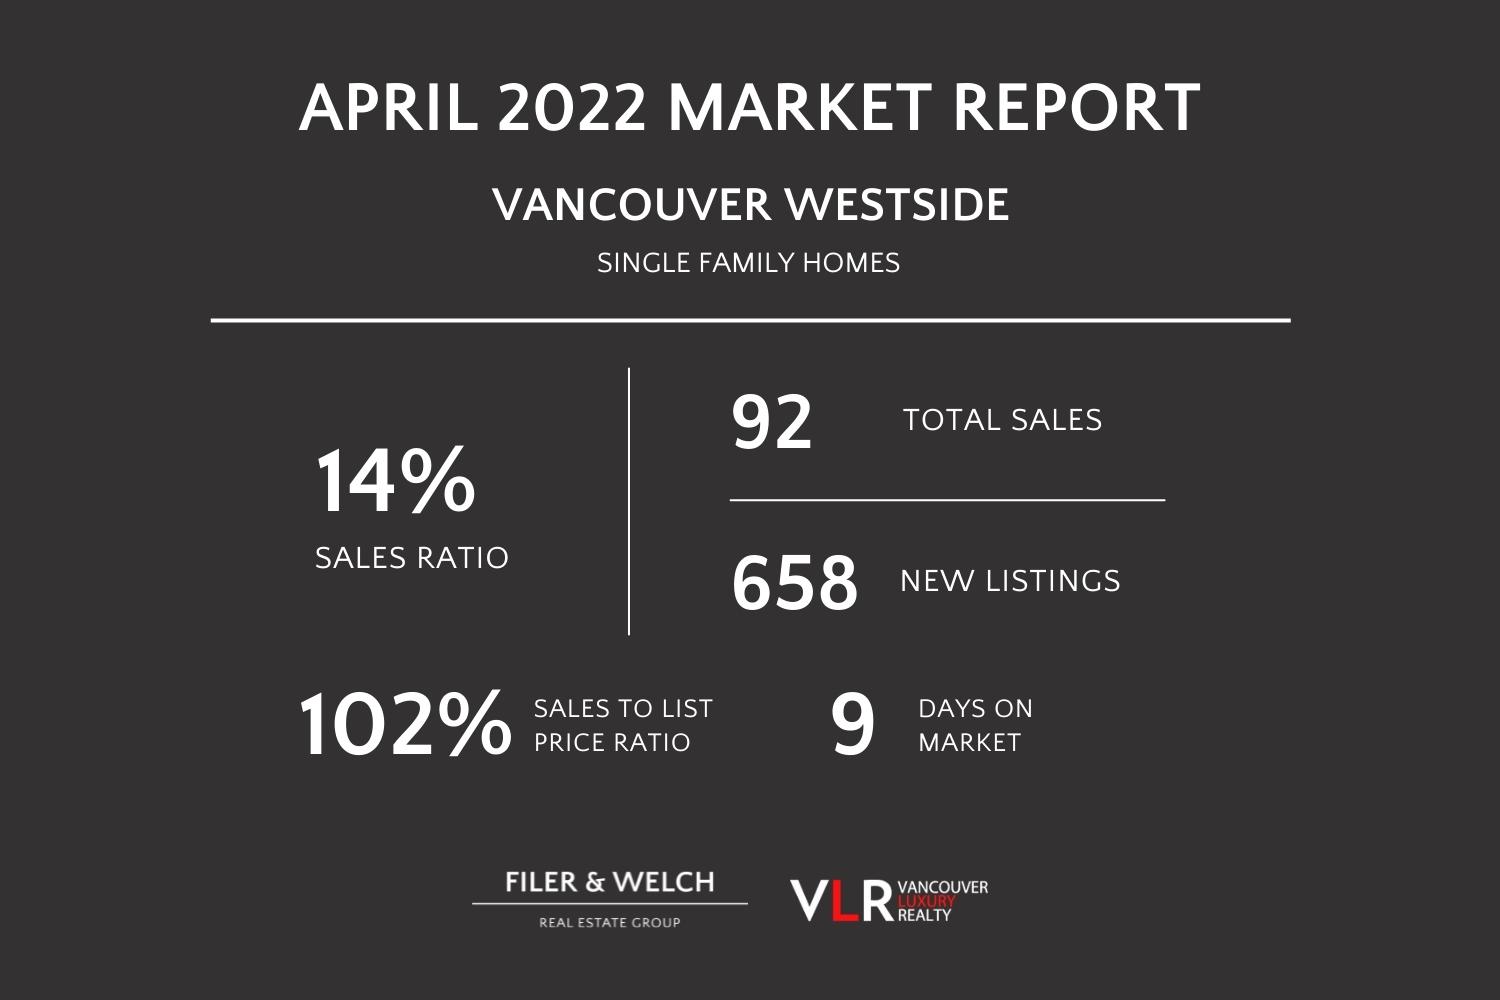 Vancouver Westside Home Sales Vancouver, April 2022